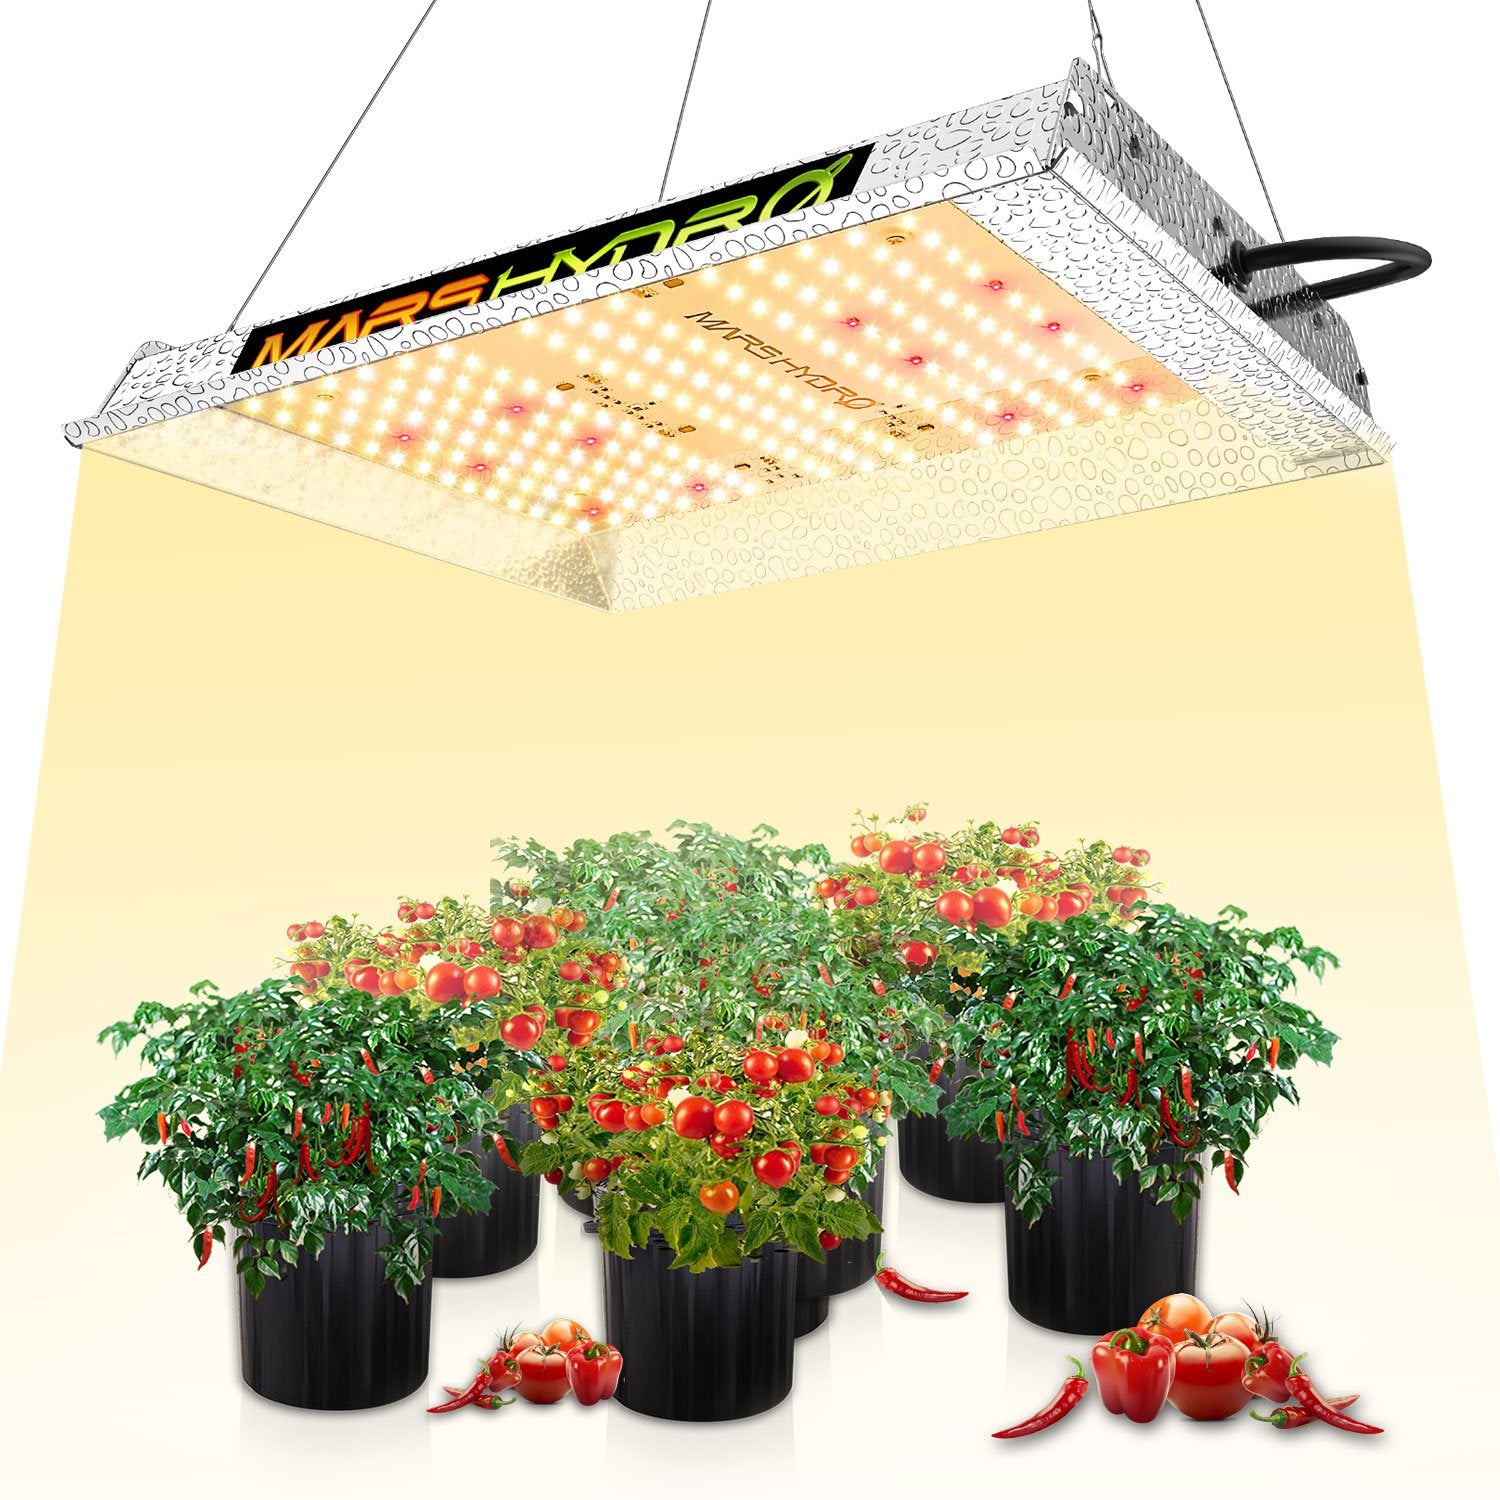 fårehyrde Jordbær Misbruge Mars Hydro TS-600 LED Grow Light New – FactoryPure